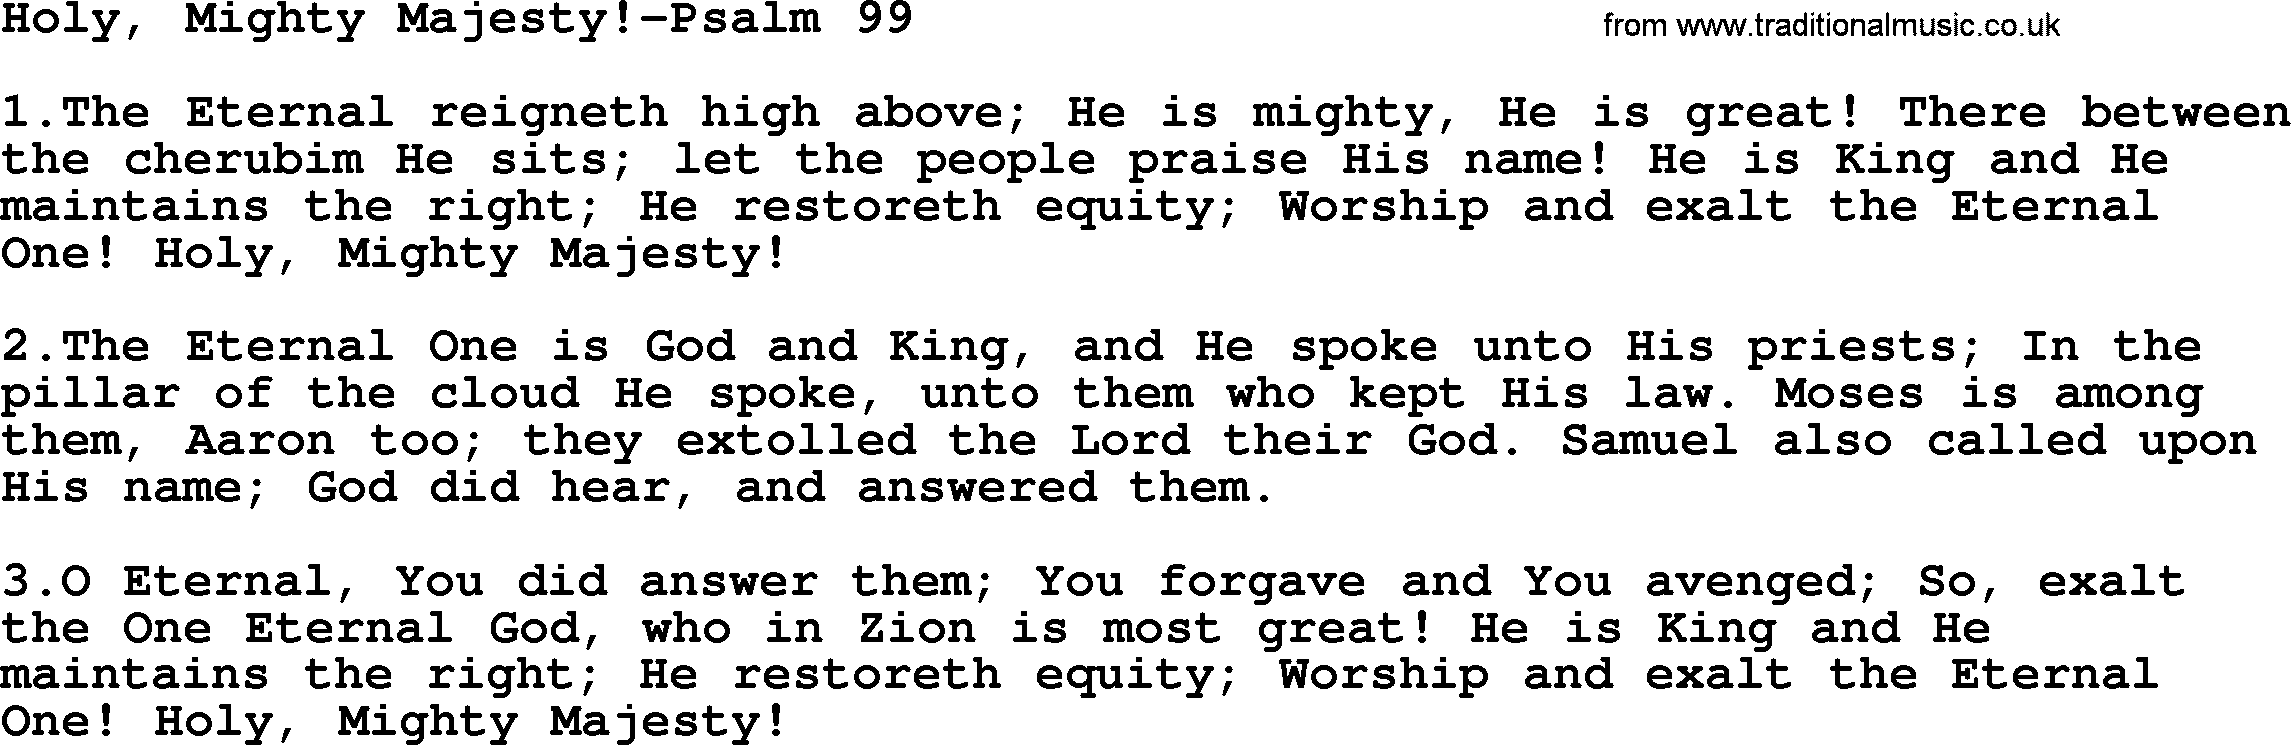 Hymns from the Psalms, Hymn: Holy, Mighty Majesty!-Psalm 99, lyrics with PDF